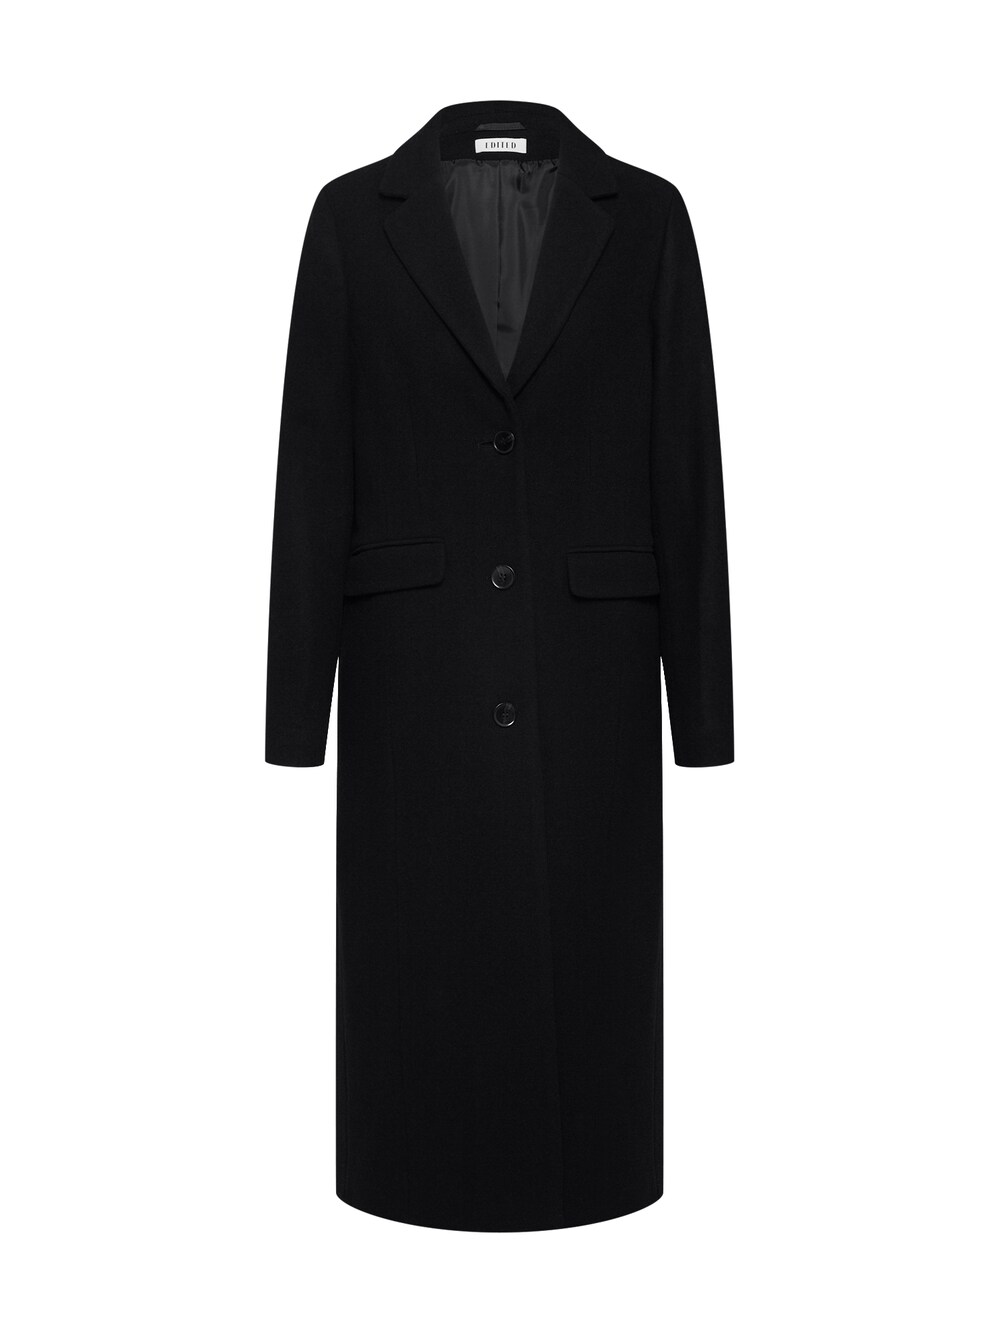 Межсезонное пальто EDITED Airin, черный